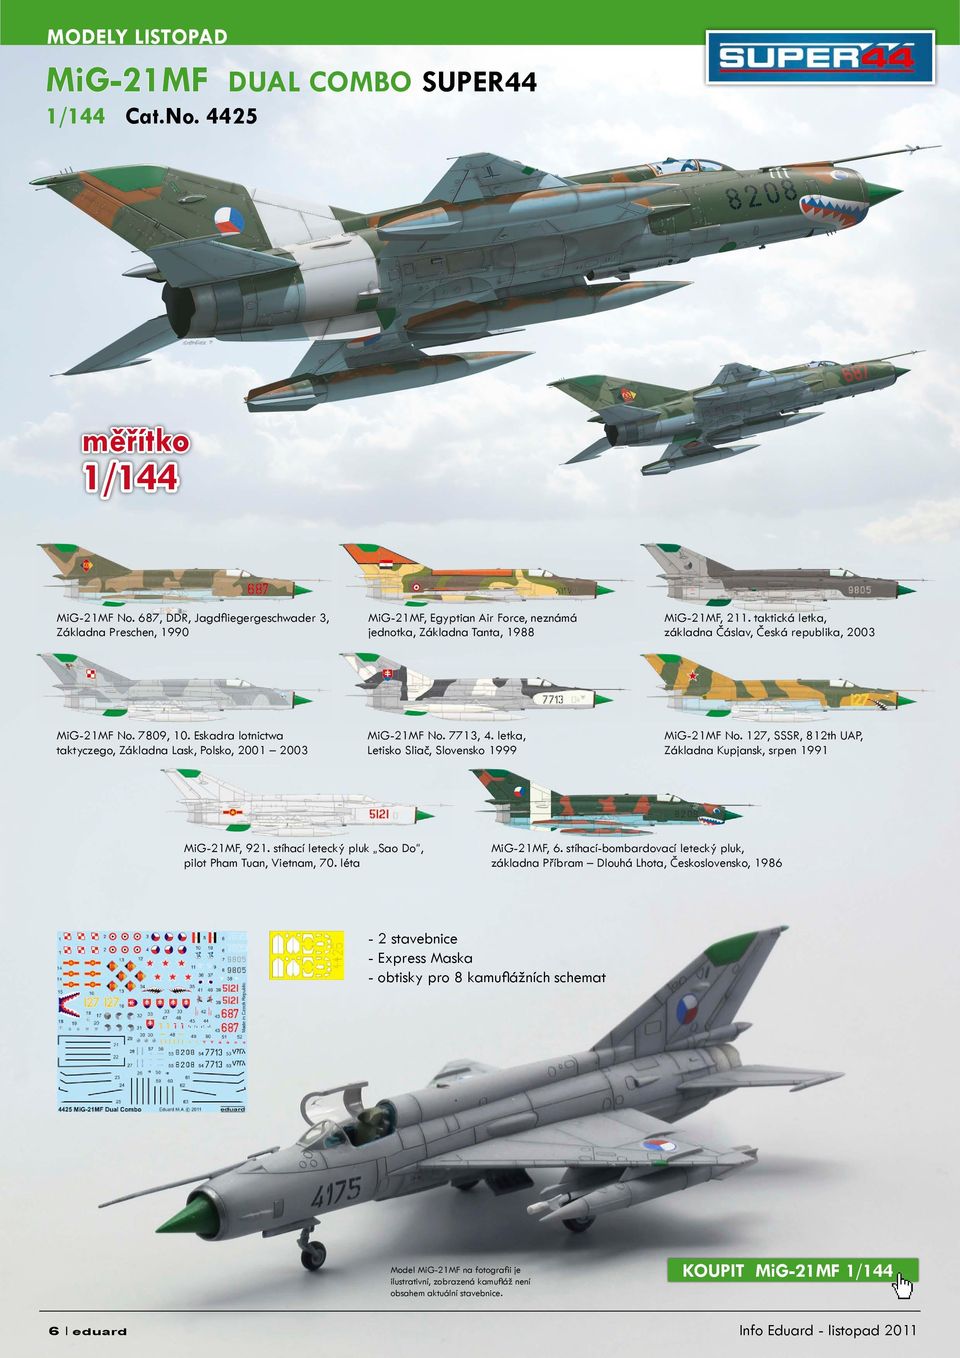 taktická letka, základna Čáslav, Česká republika, 2003 MiG-21MF No. 7809, 10. Eskadra lotnictwa taktyczego, Základna Lask, Polsko, 2001 2003 MiG-21MF No. 7713, 4.